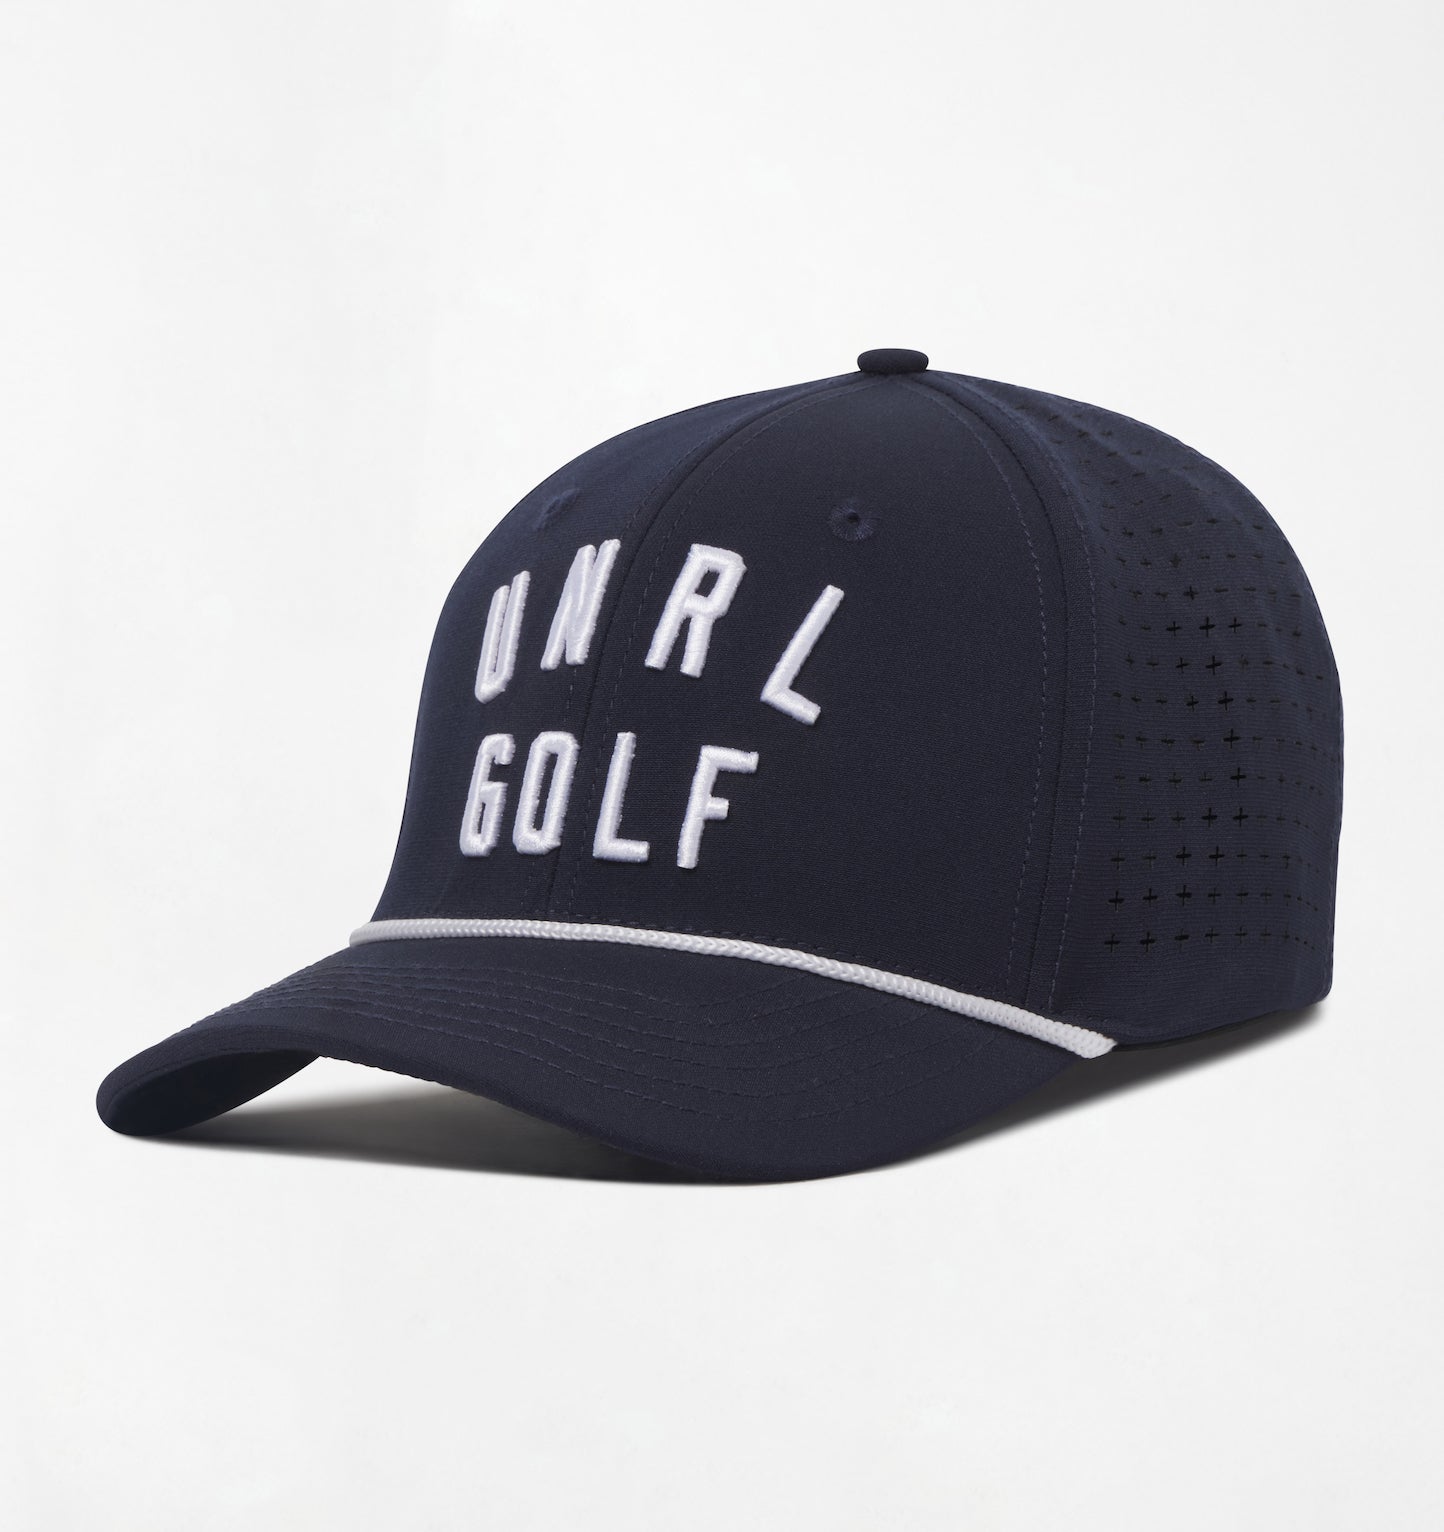 UNRL Vintage Rope Golf Snapback Hat Navy/White